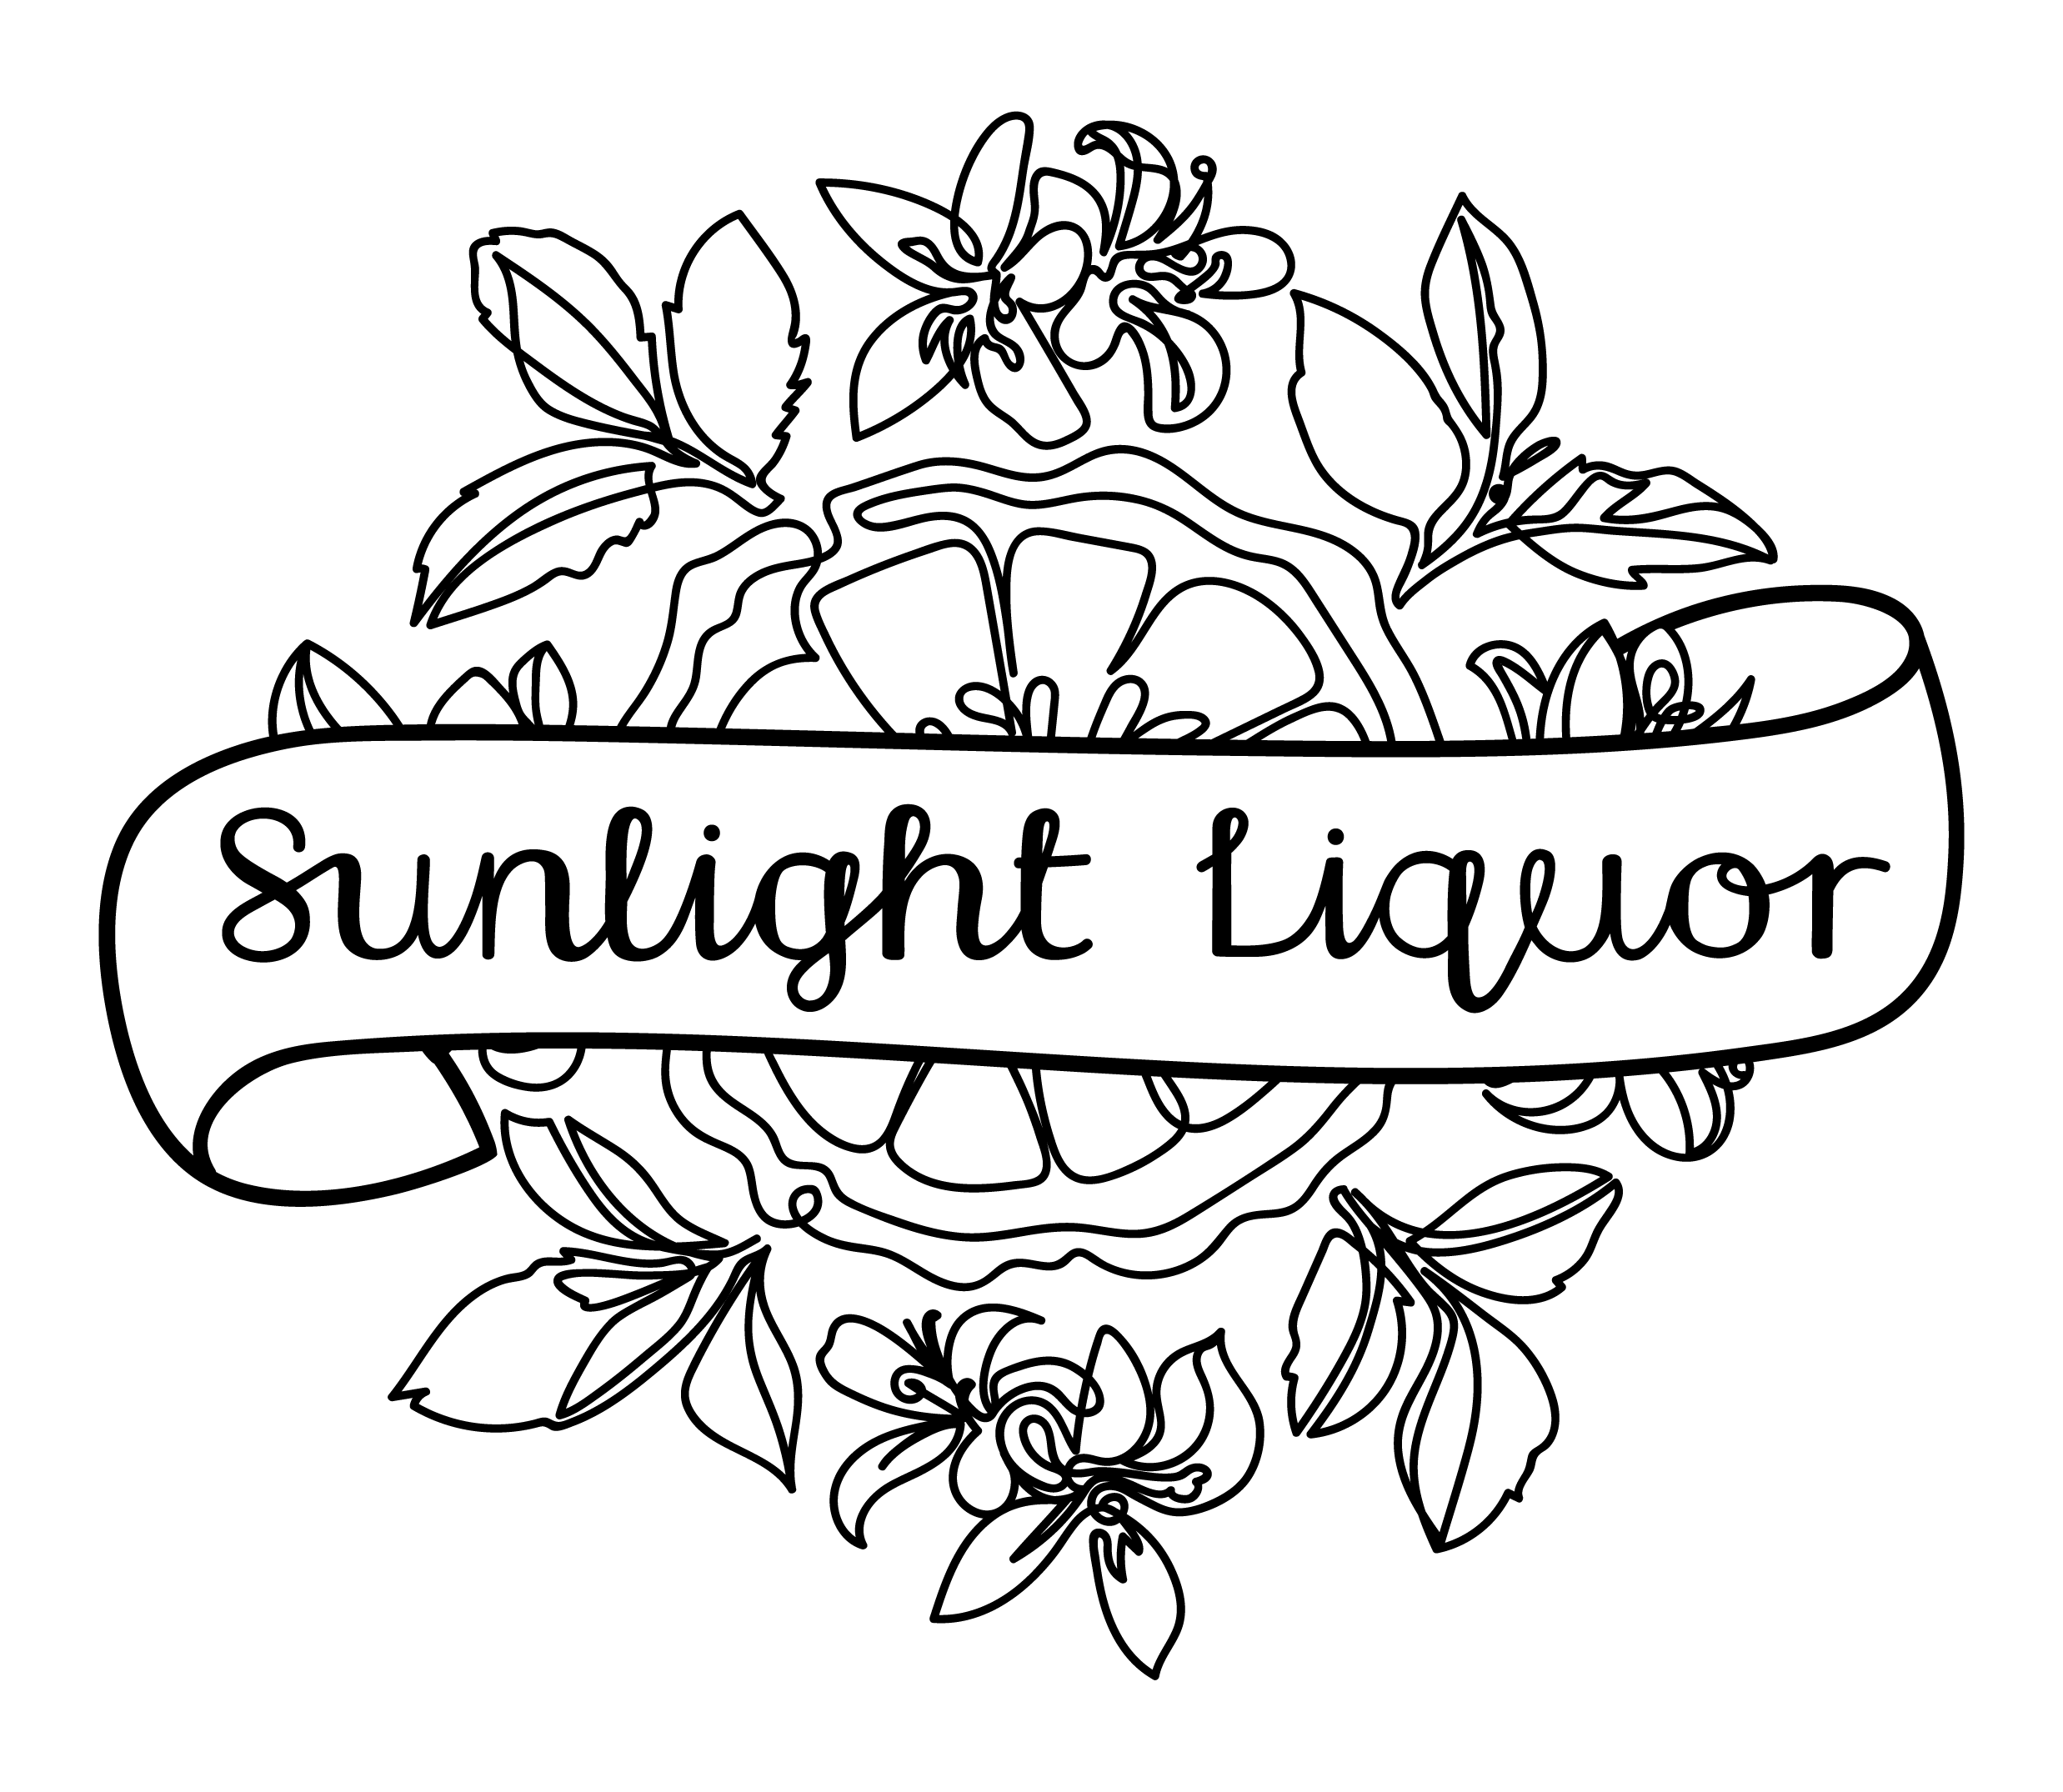 Sunlight Liquor